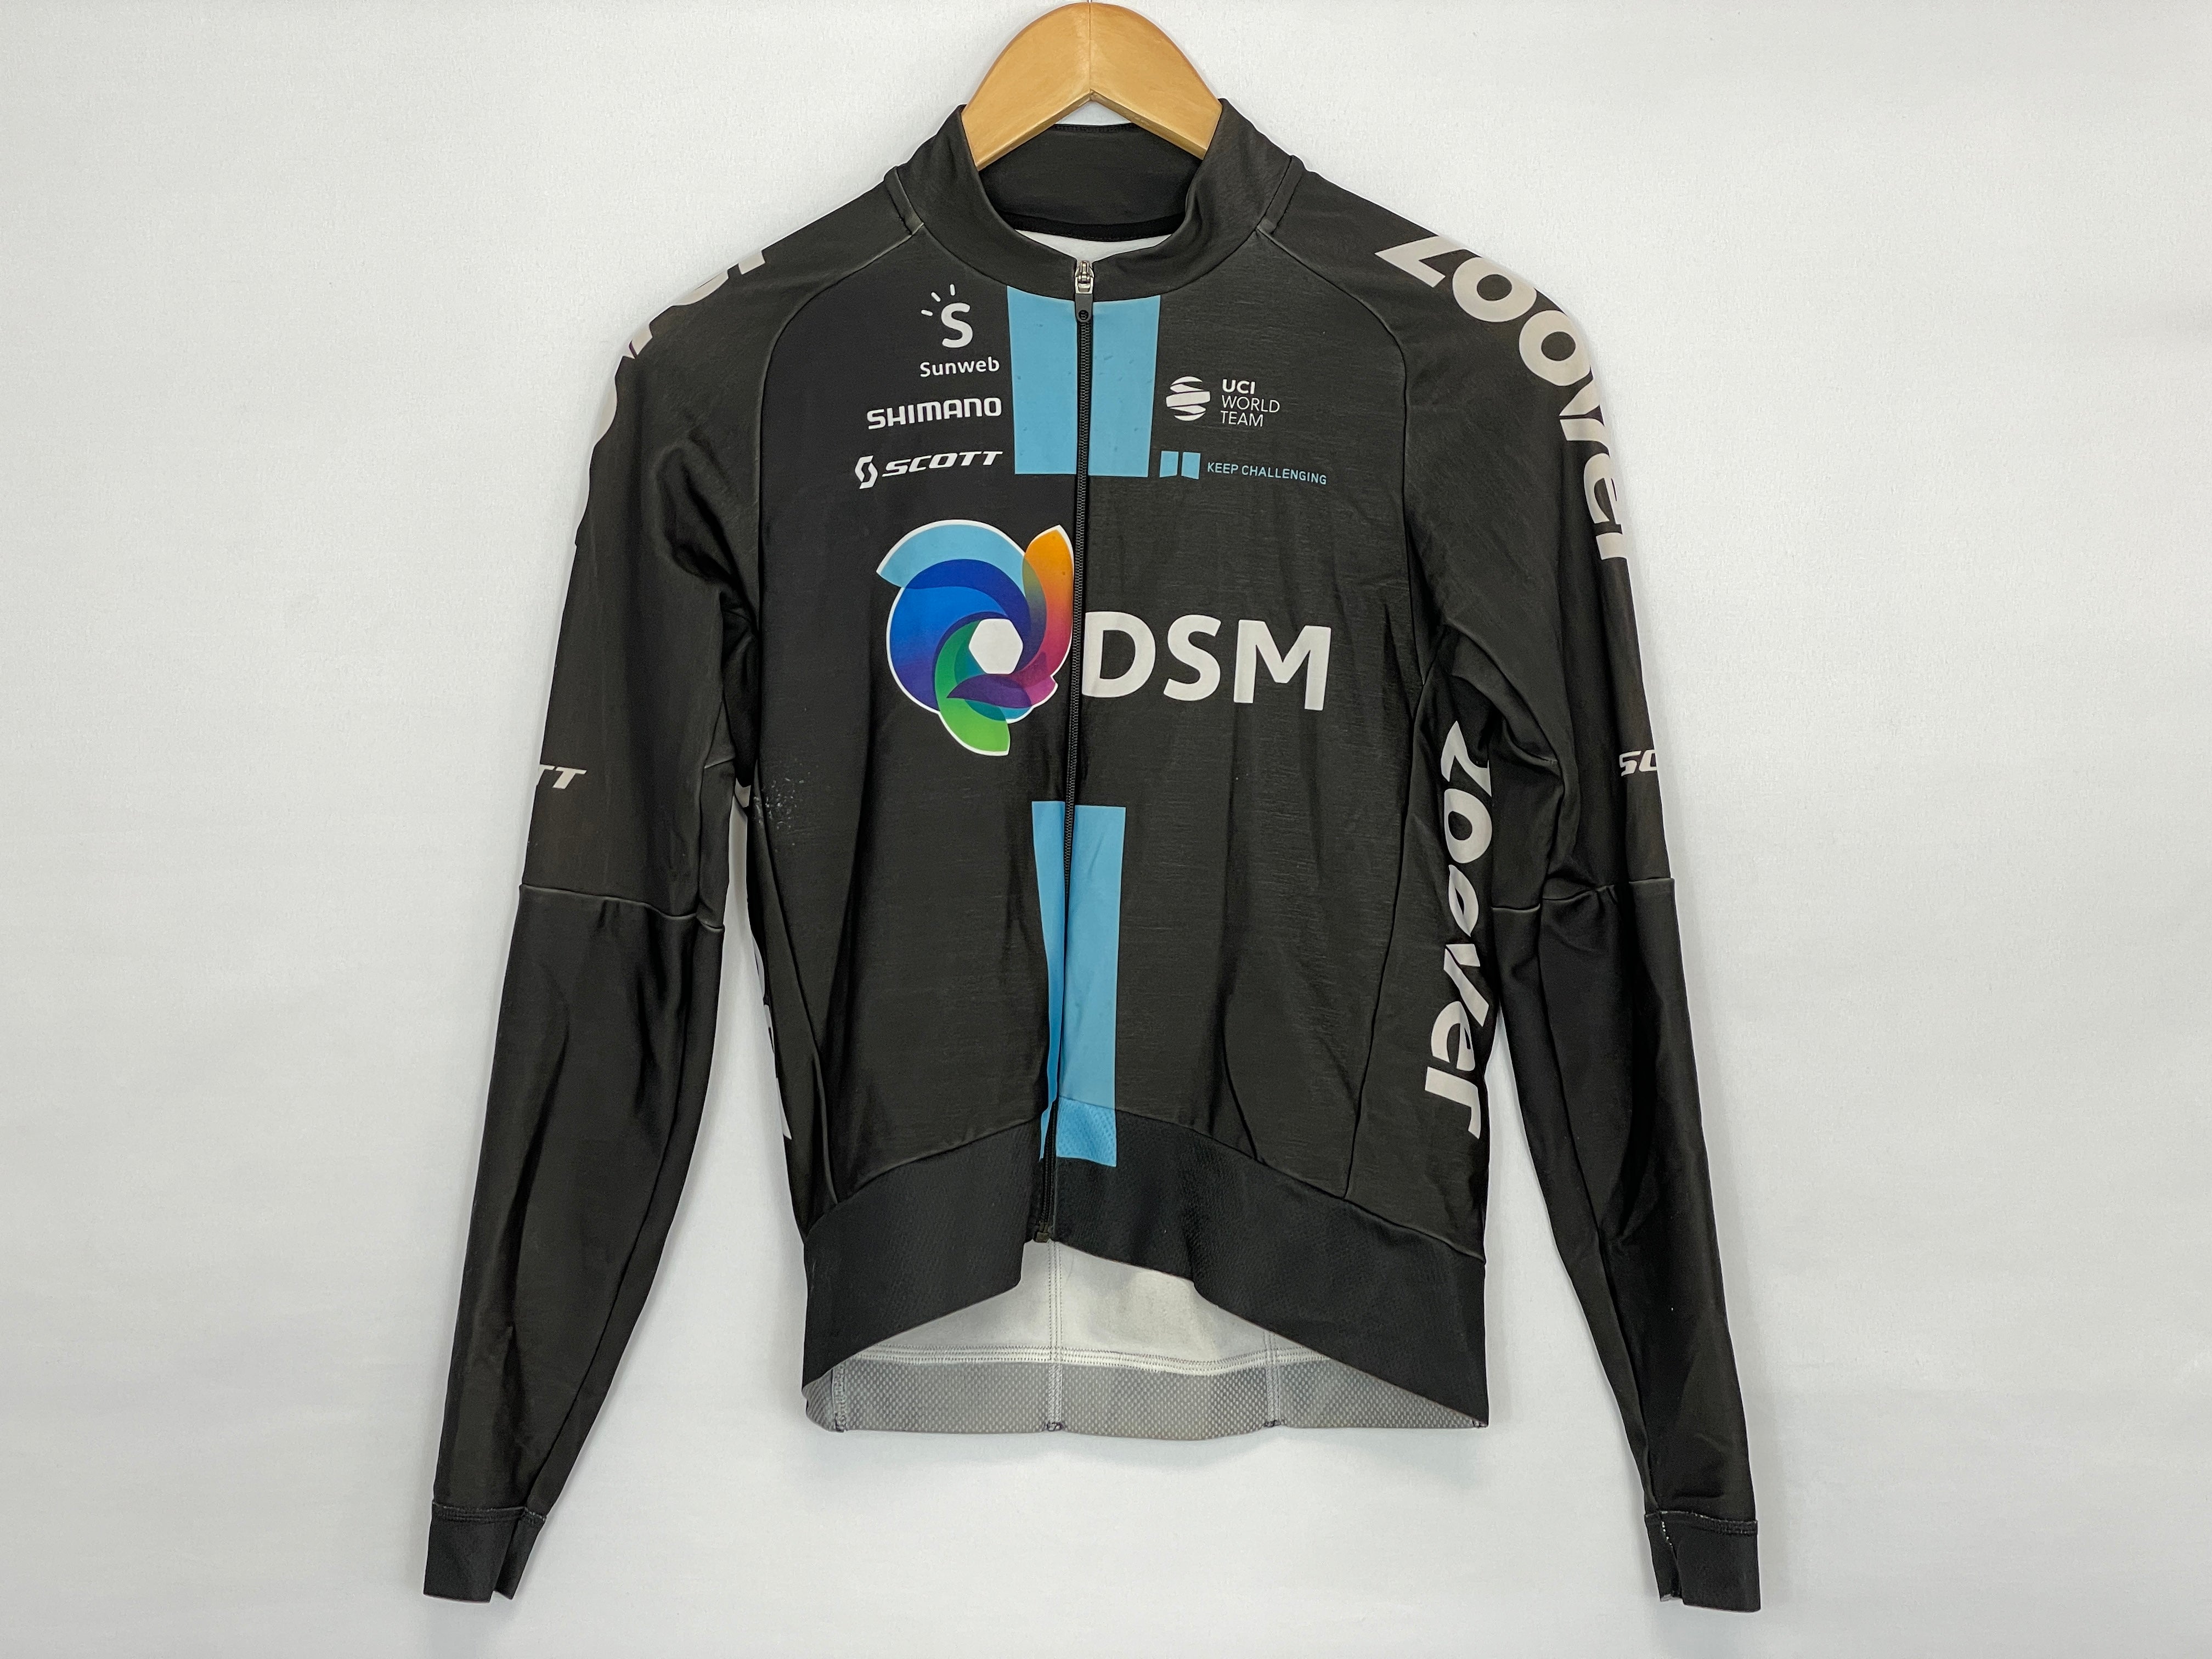 Team DSM - Thermal Jersey by Bioracer